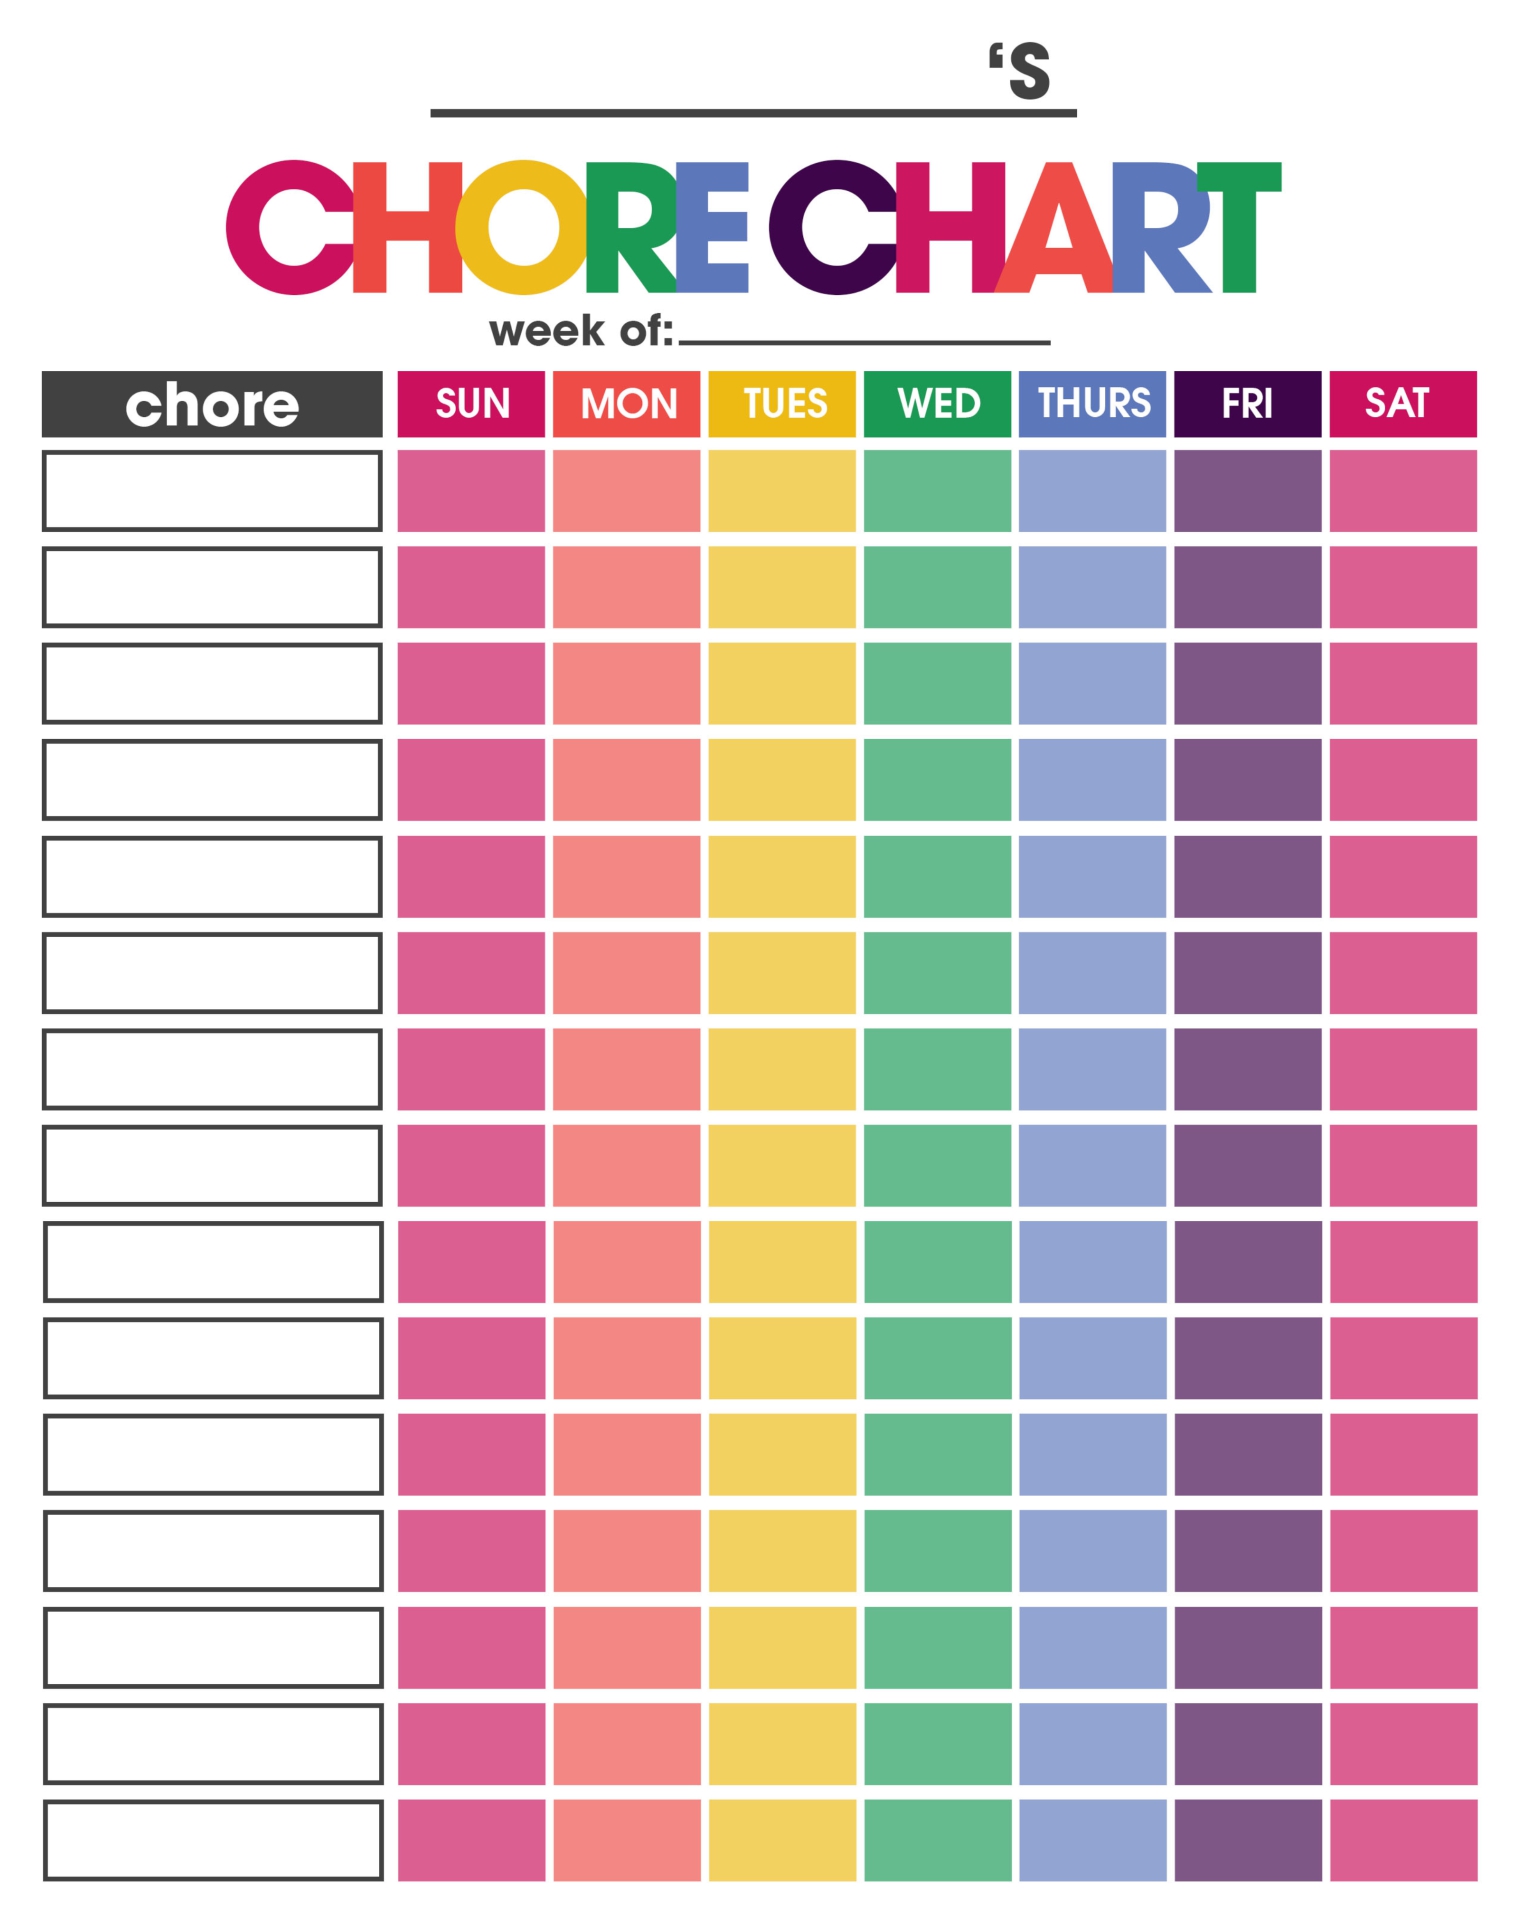 editable-family-chore-chart-printable-weekly-chore-list-kids-adults-chore-chart